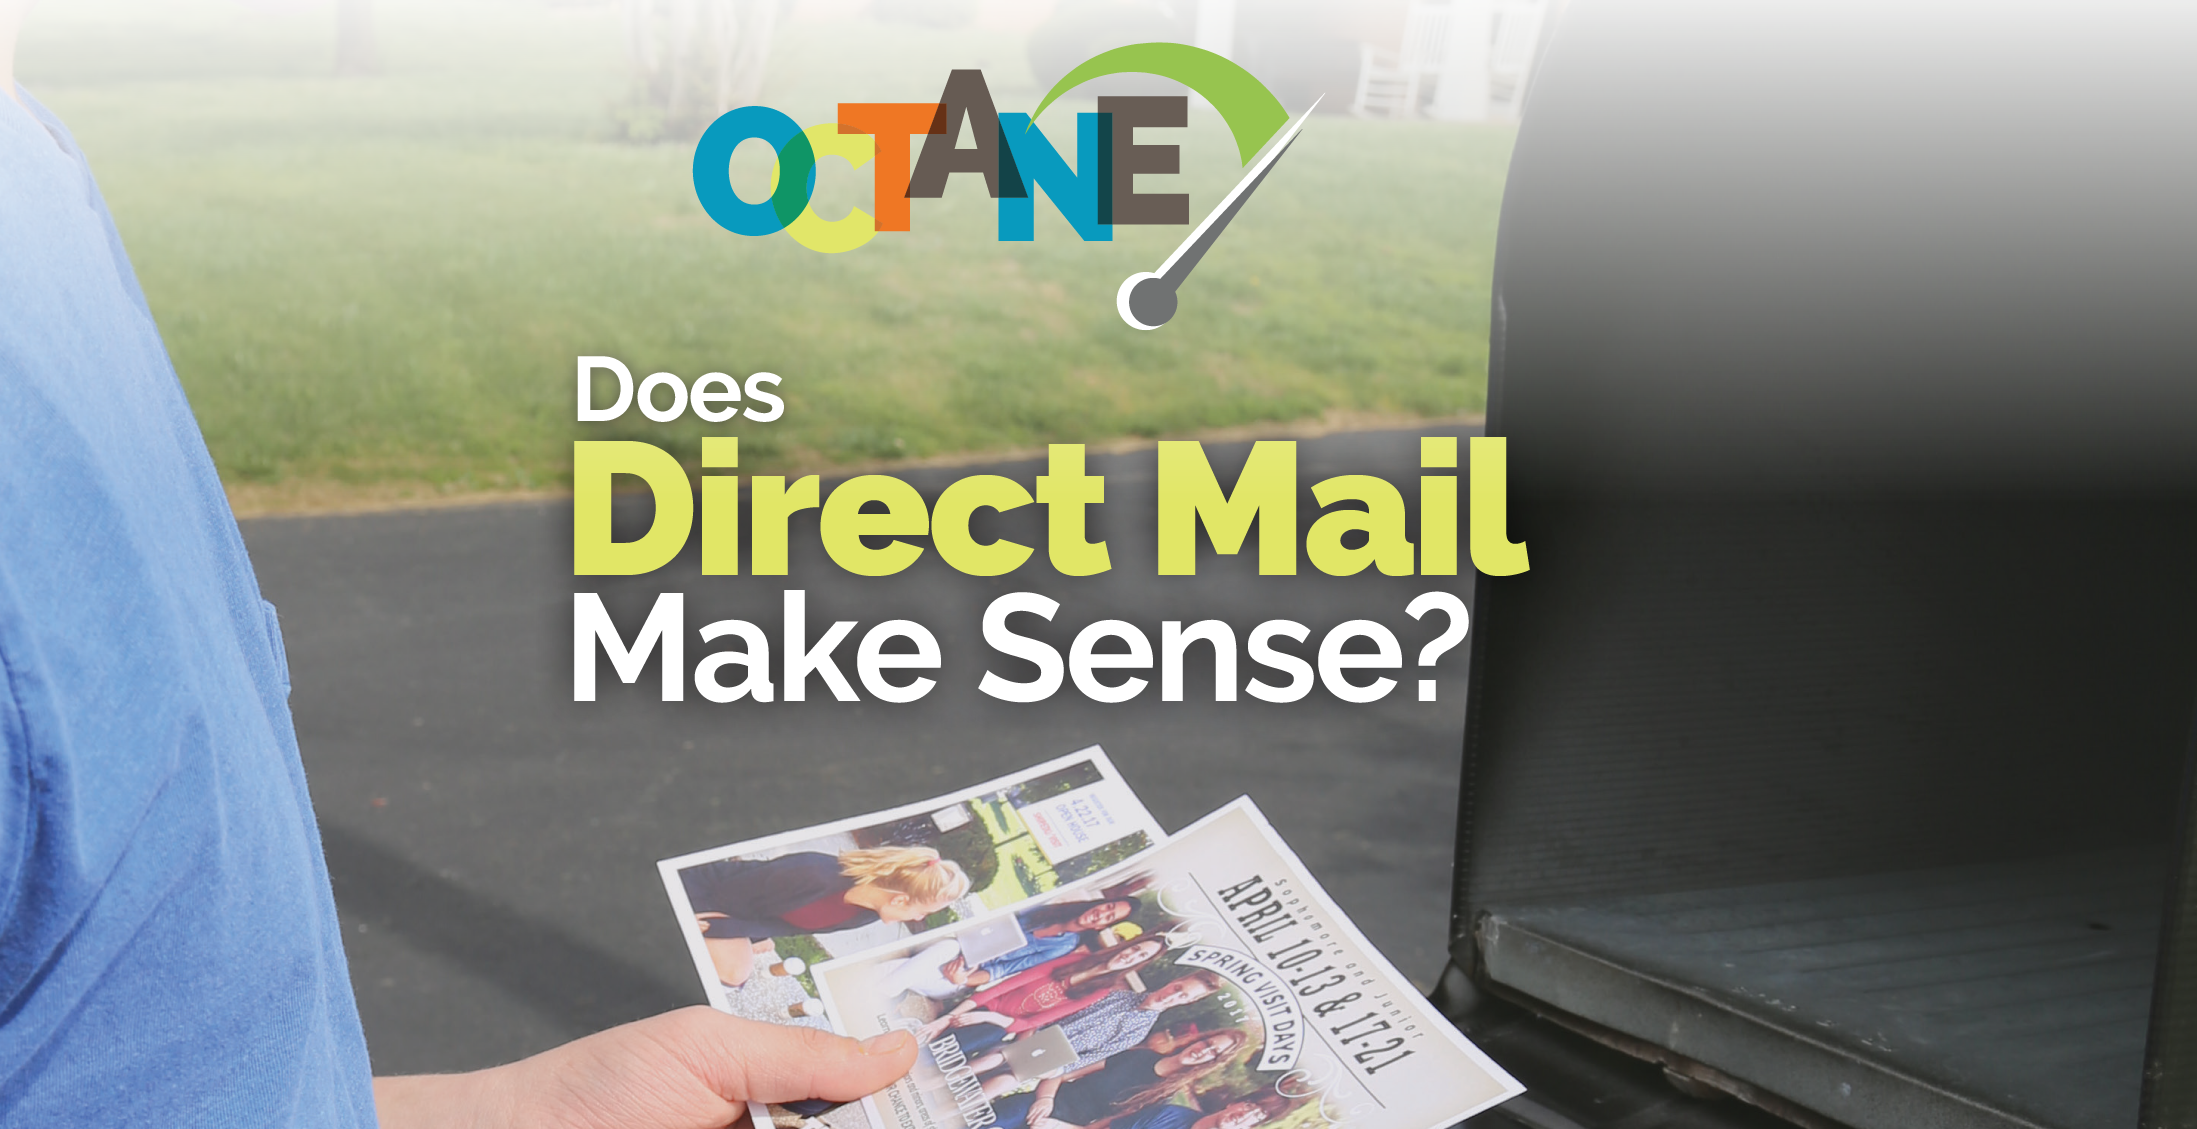 OCTANE—Does Direct Mail Make Sense?